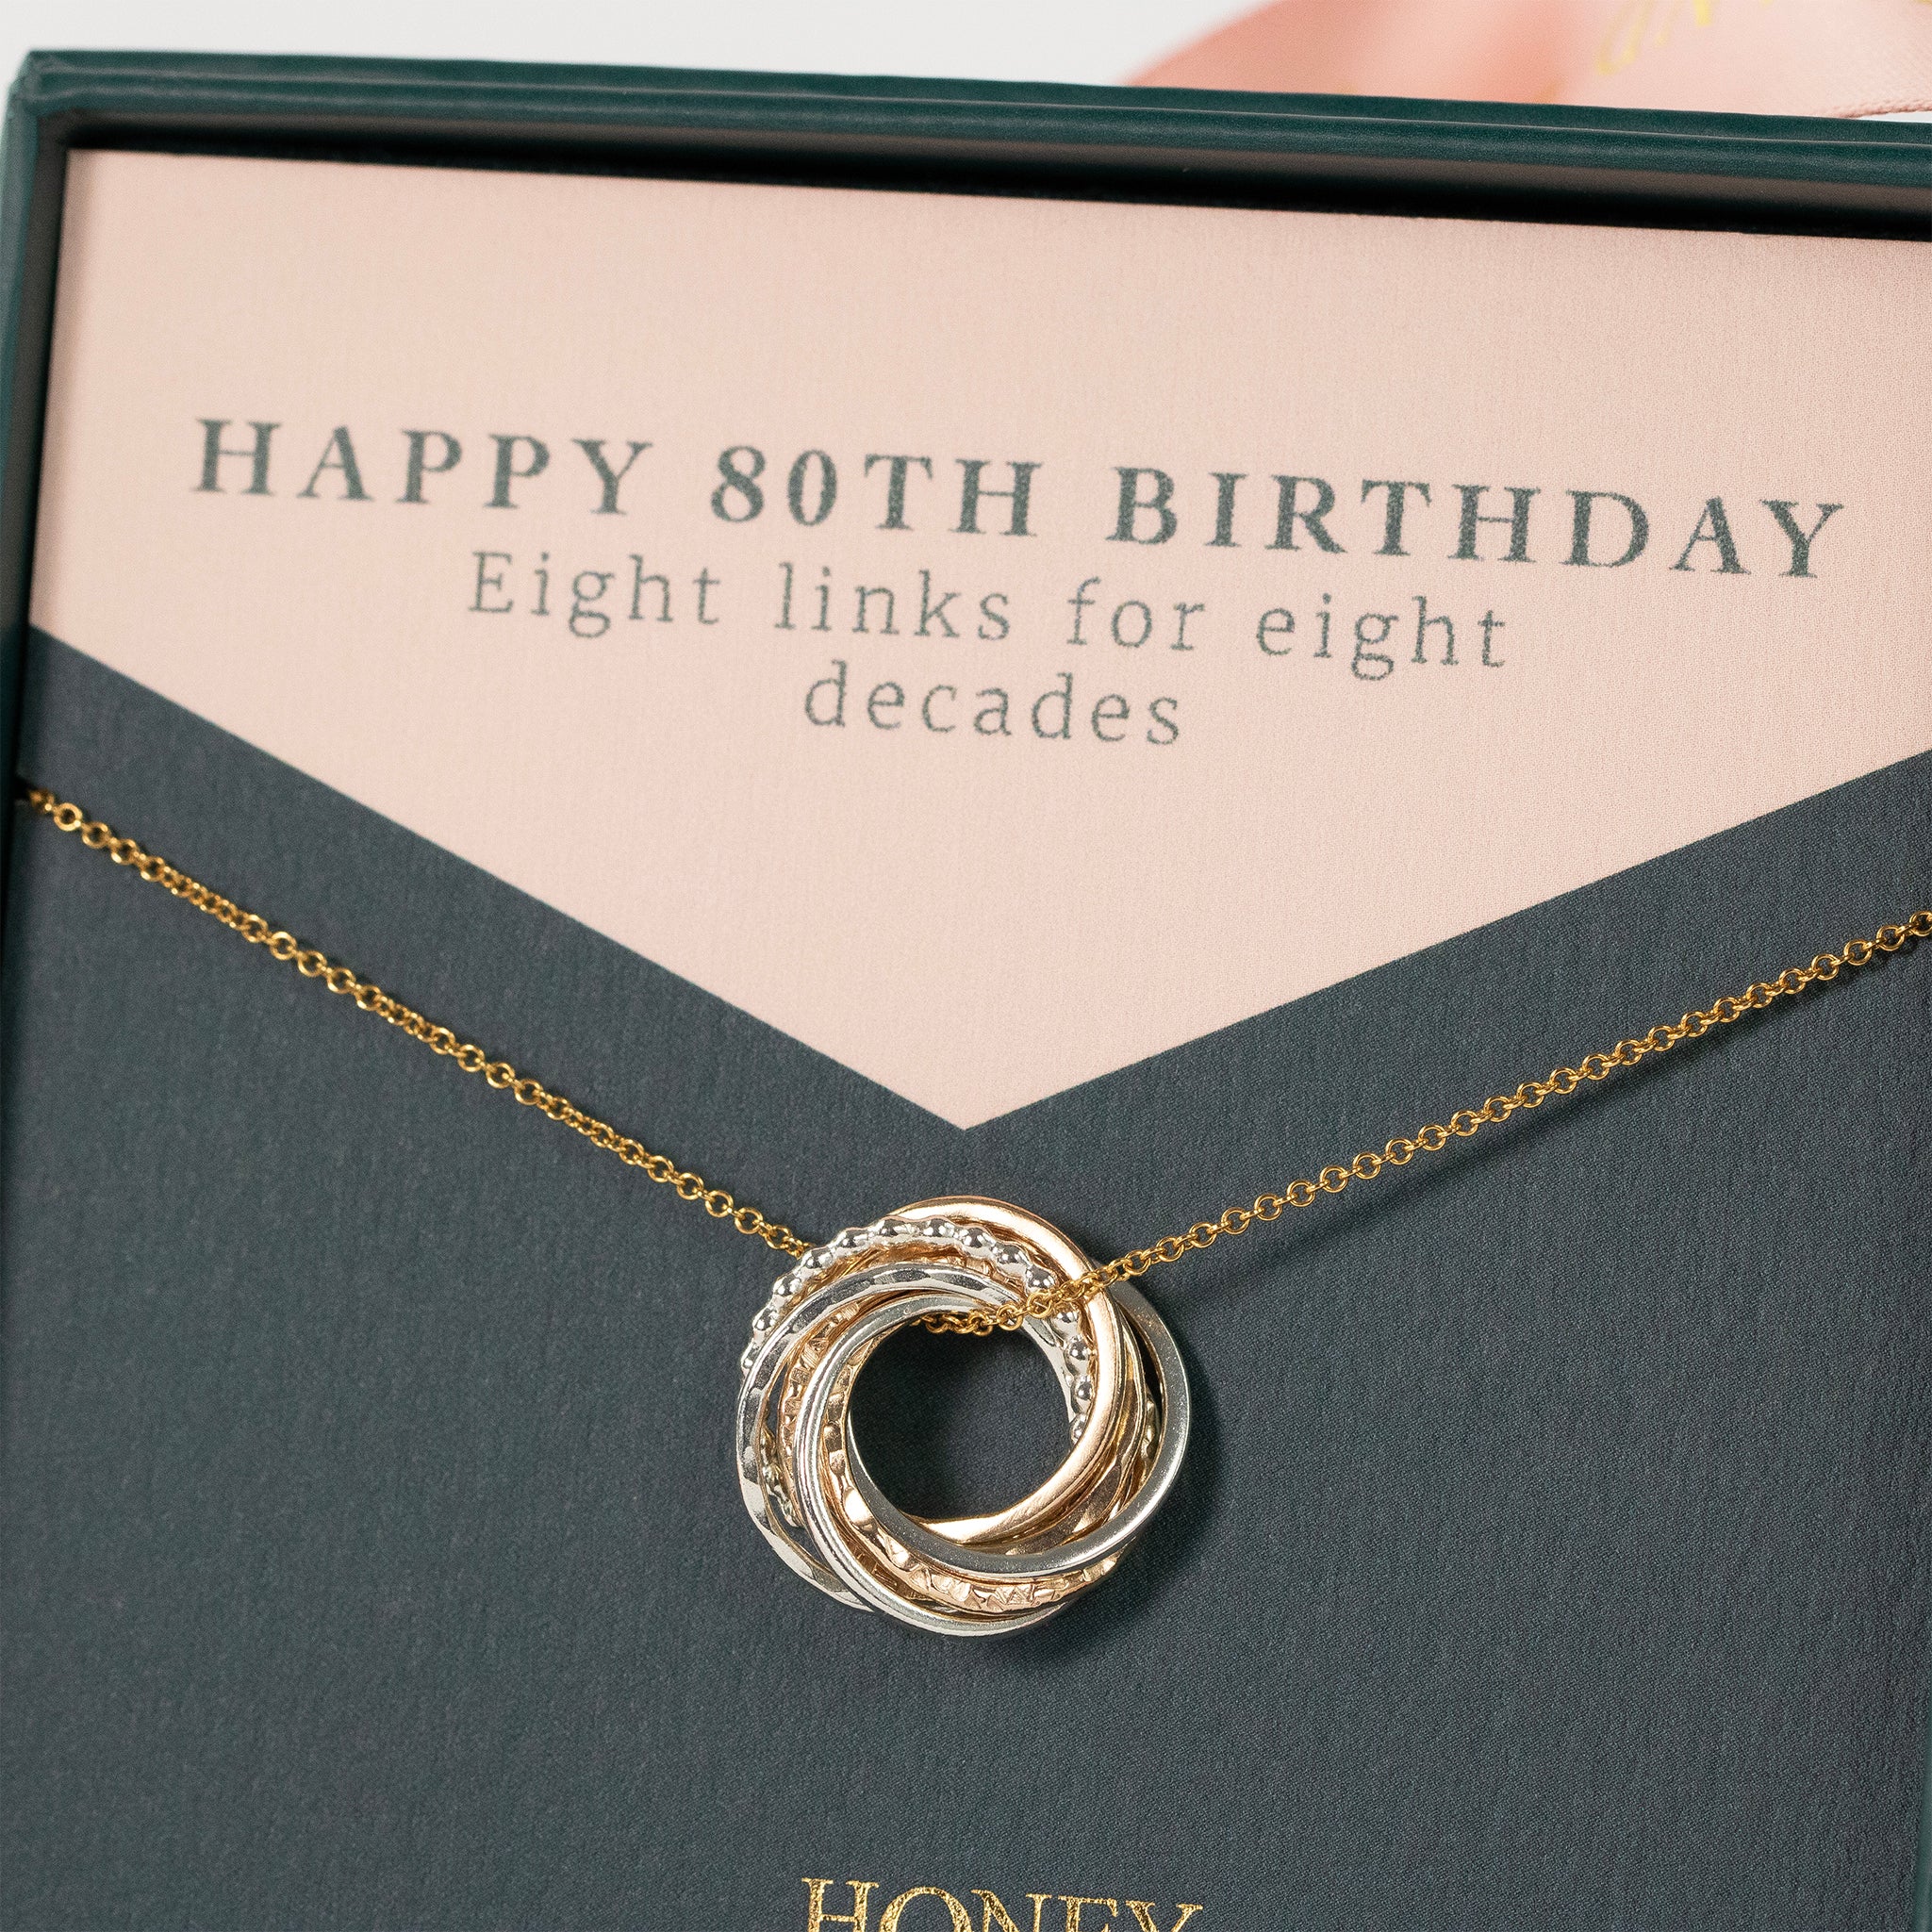 Carrie Elspeth Bracelet 'Happy 80th Birthday' Sentiment Gift Card